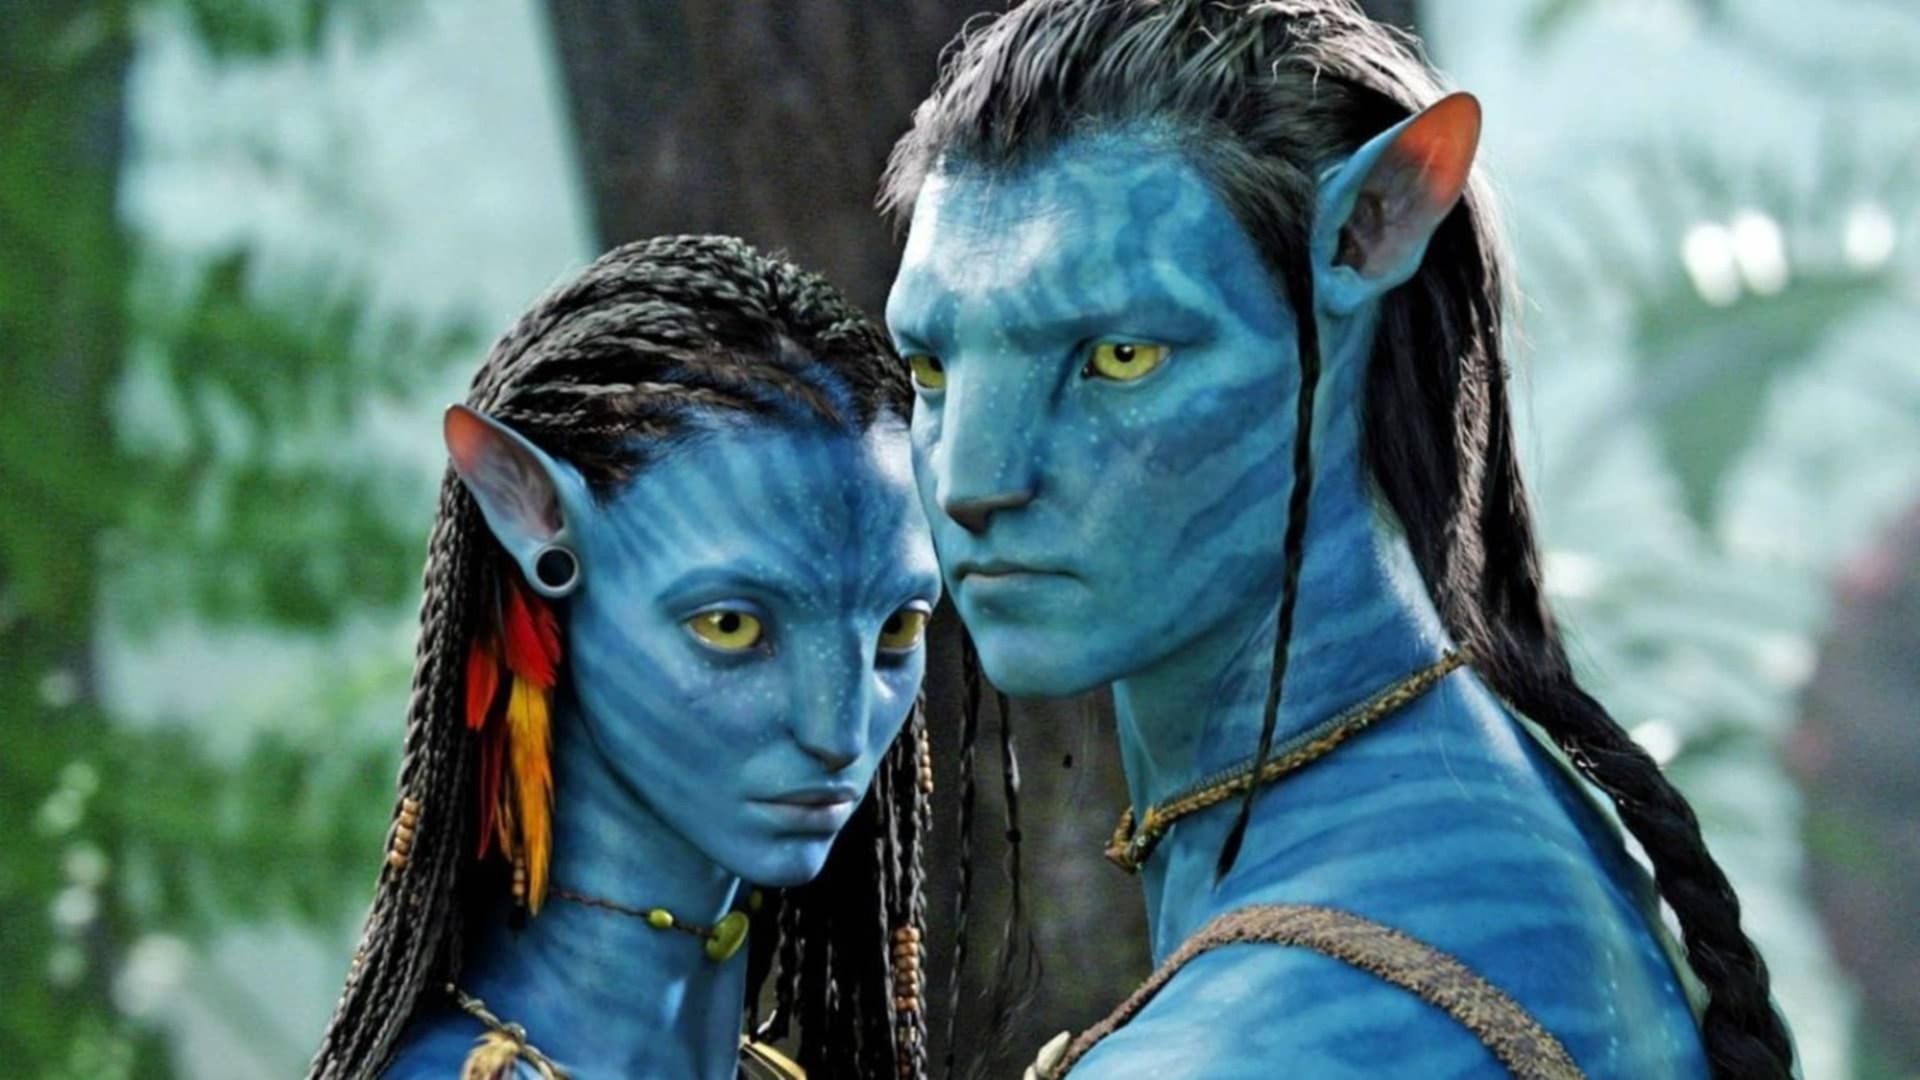 Avatar 2 Streaming Vf #Avatar 2 : la voie de l'eau 𝐒𝐓𝐑𝐄𝐀𝐌𝐈𝐍𝐆 𝐕𝐅 𝐂𝐎𝐌𝐏𝐋𝐄𝐓 𝐆𝐑𝐀𝐓𝐔𝐈𝐓 𝐇𝐃 - Football